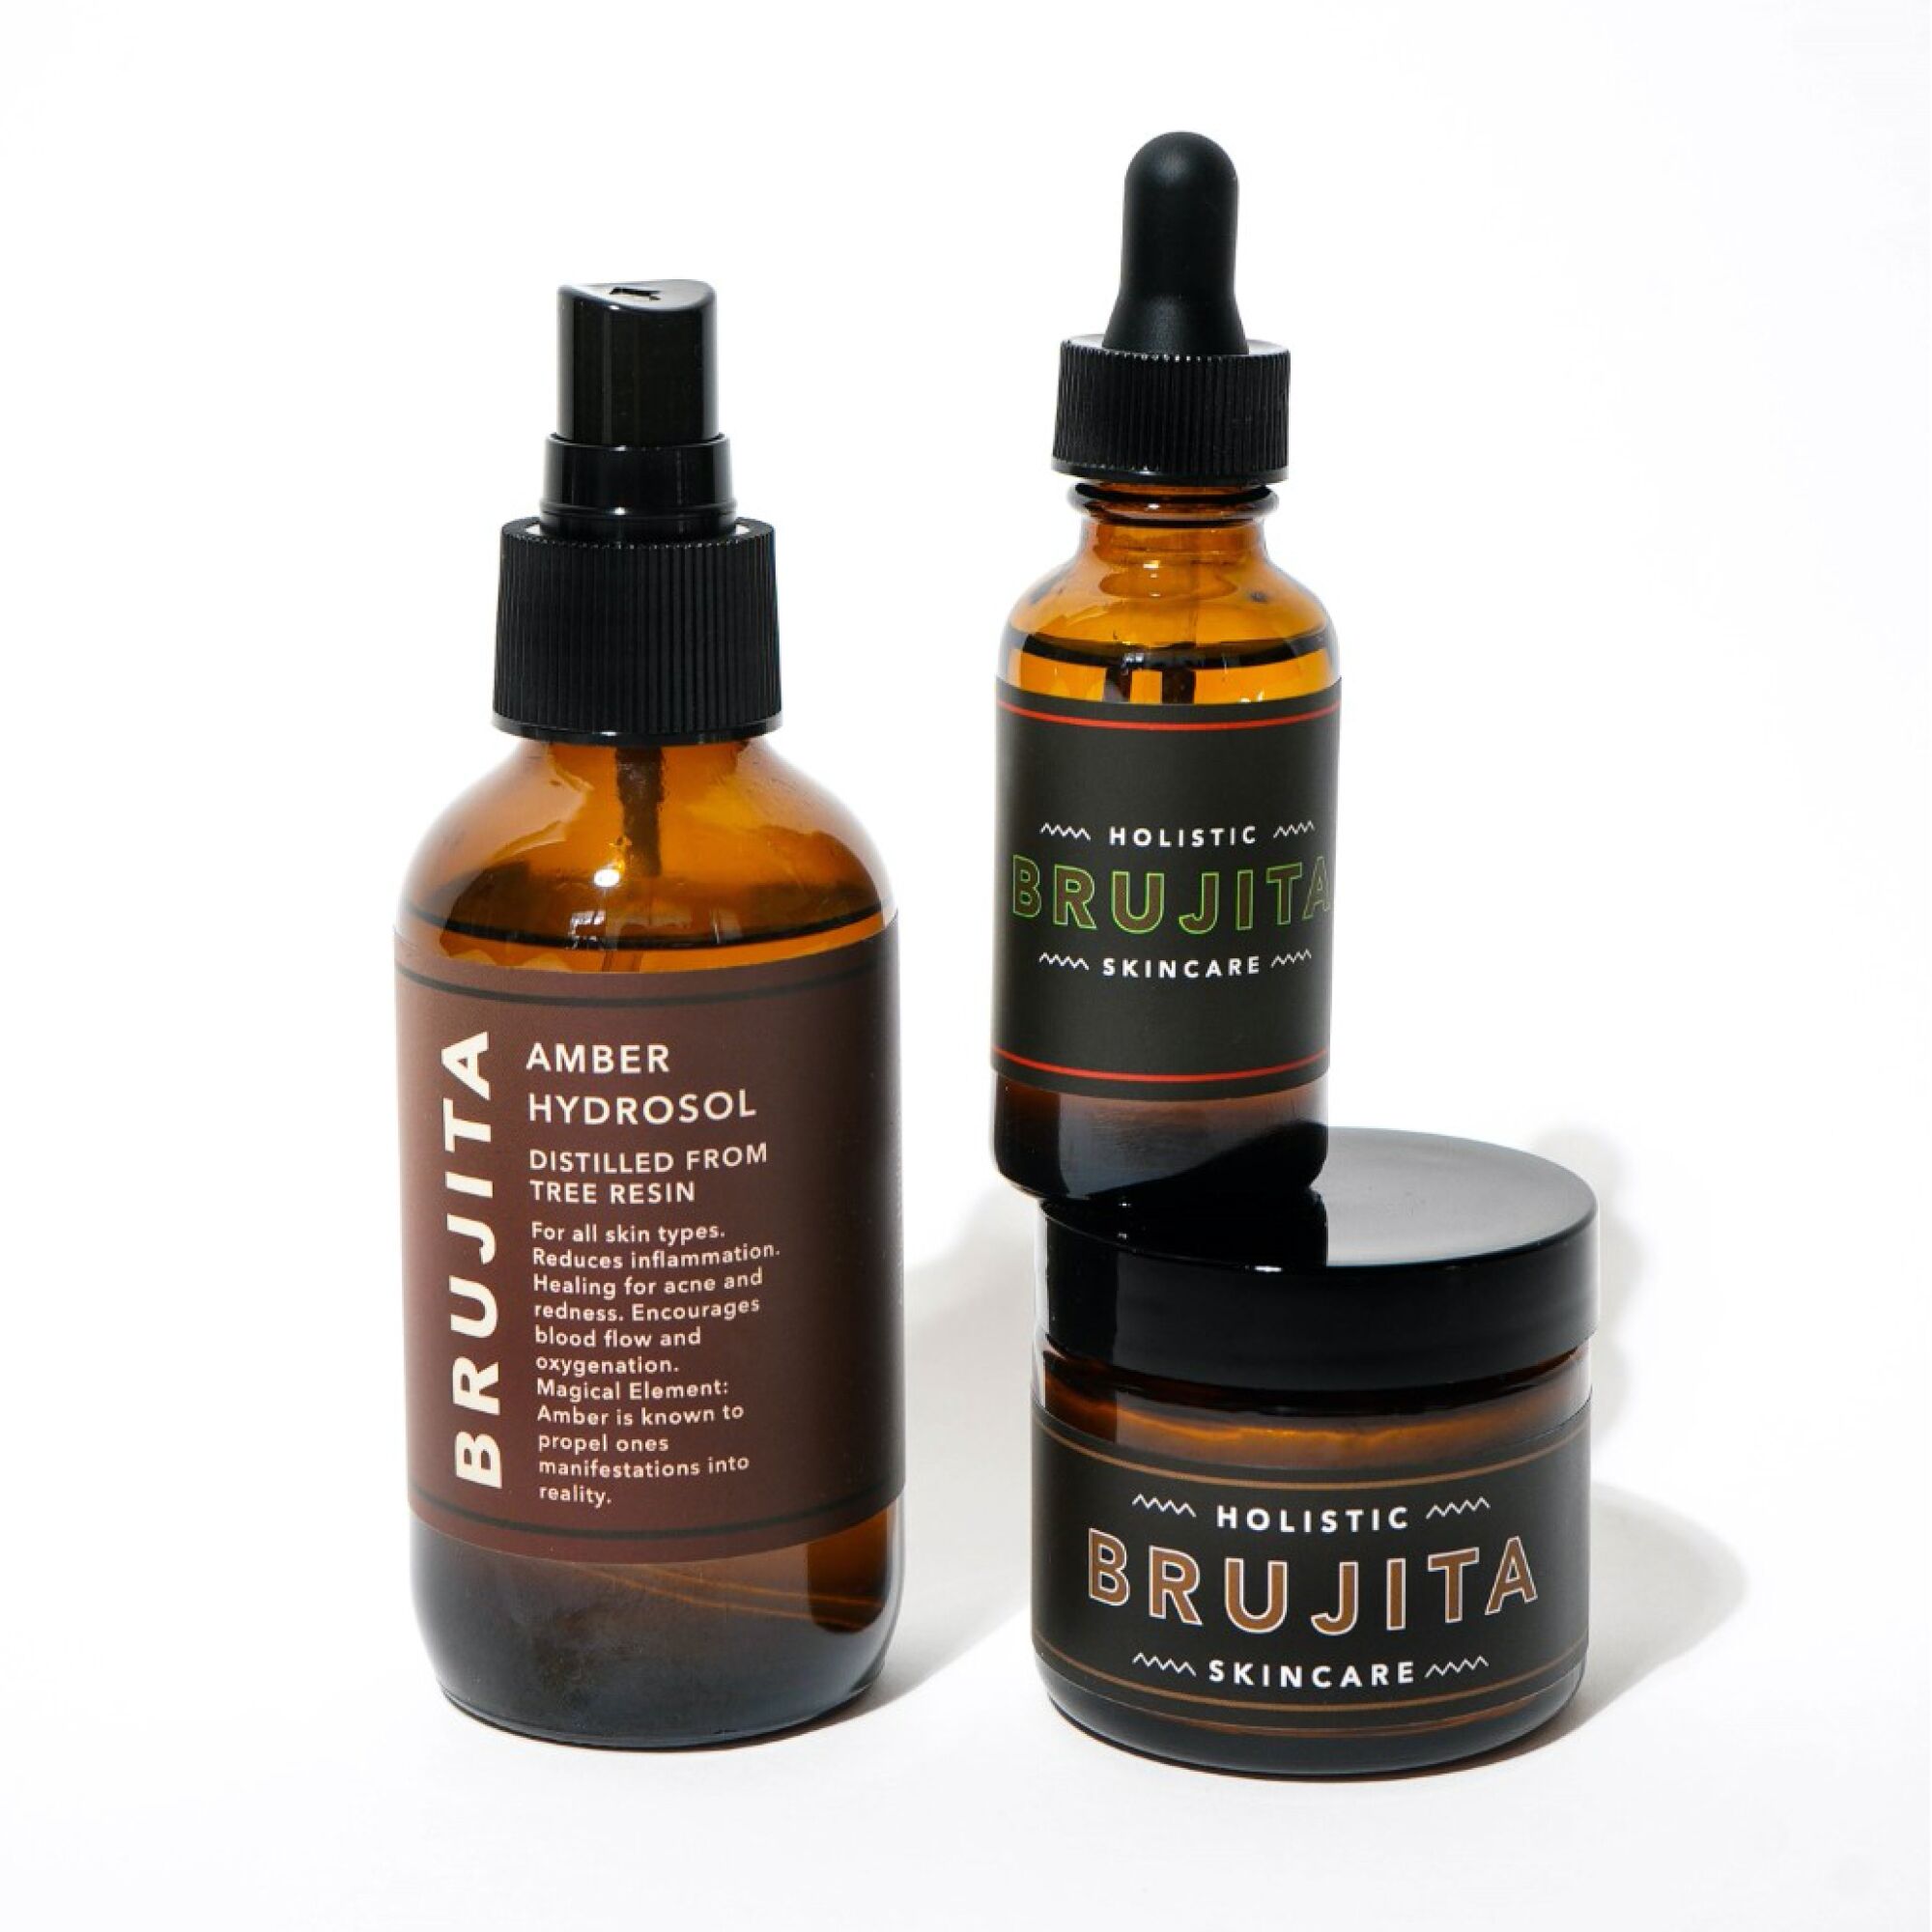 GIFT GUIDE - SKINCARE: Brujita Skincare Essential Kit